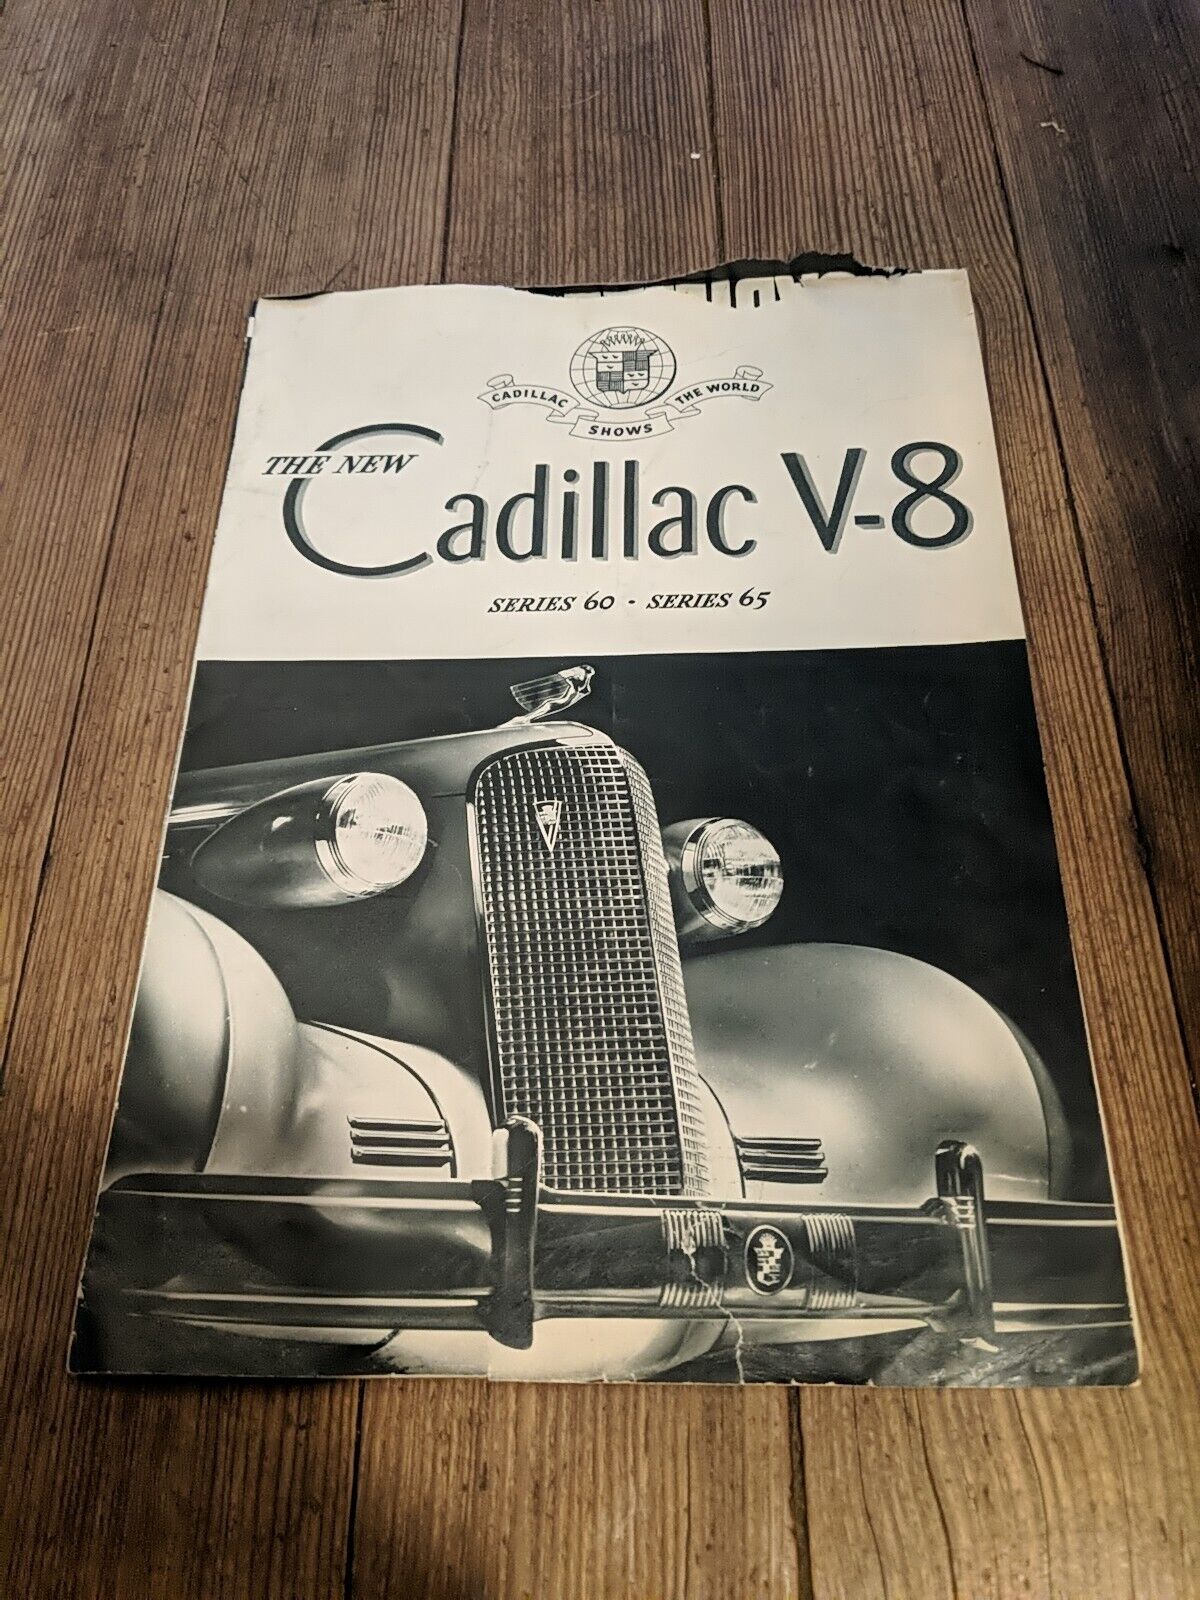 1936 THE NEW CADILLAC V-8 SERIES 60- 65 POSTER SIGN BROCHURE BOOK VTG RARE